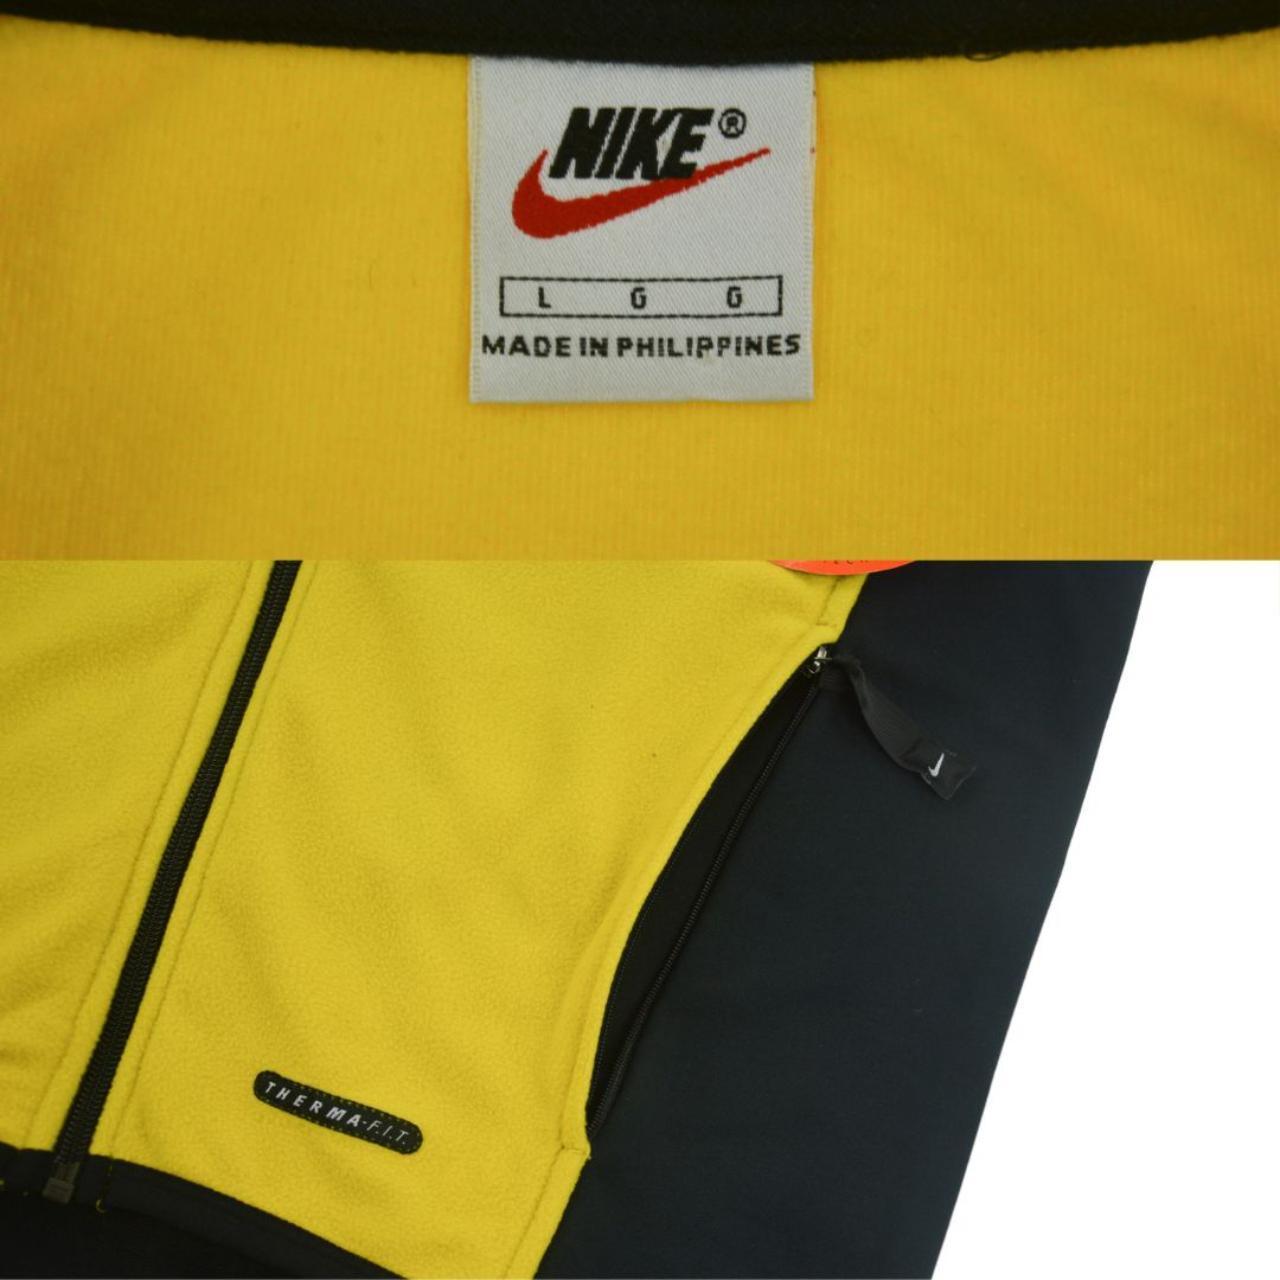 Vintage Nike Zip Up Vest Fleece Size S - Known Source